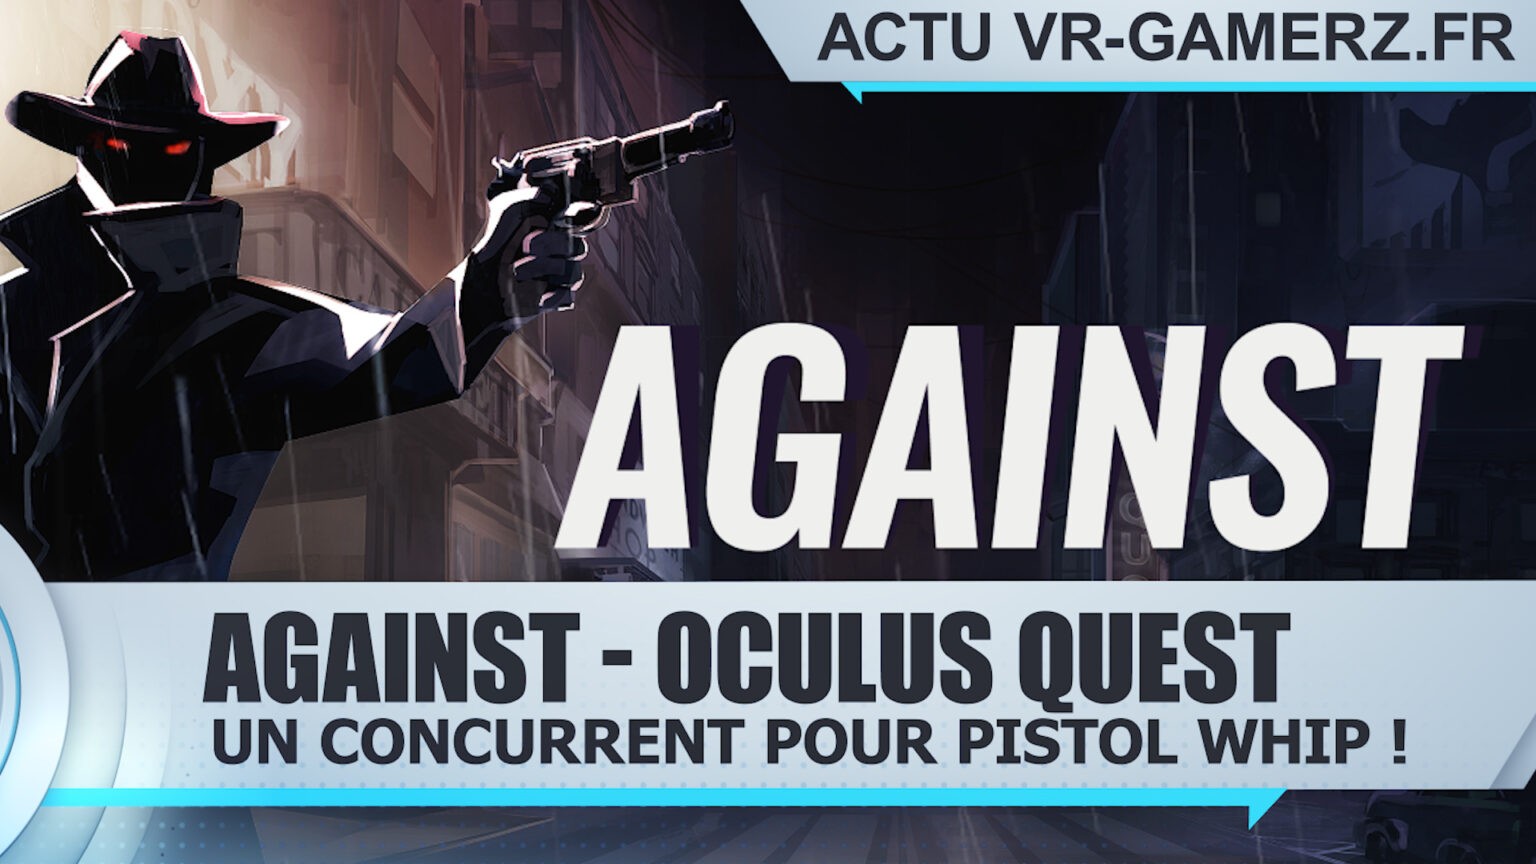 download oculus quest pistol whip